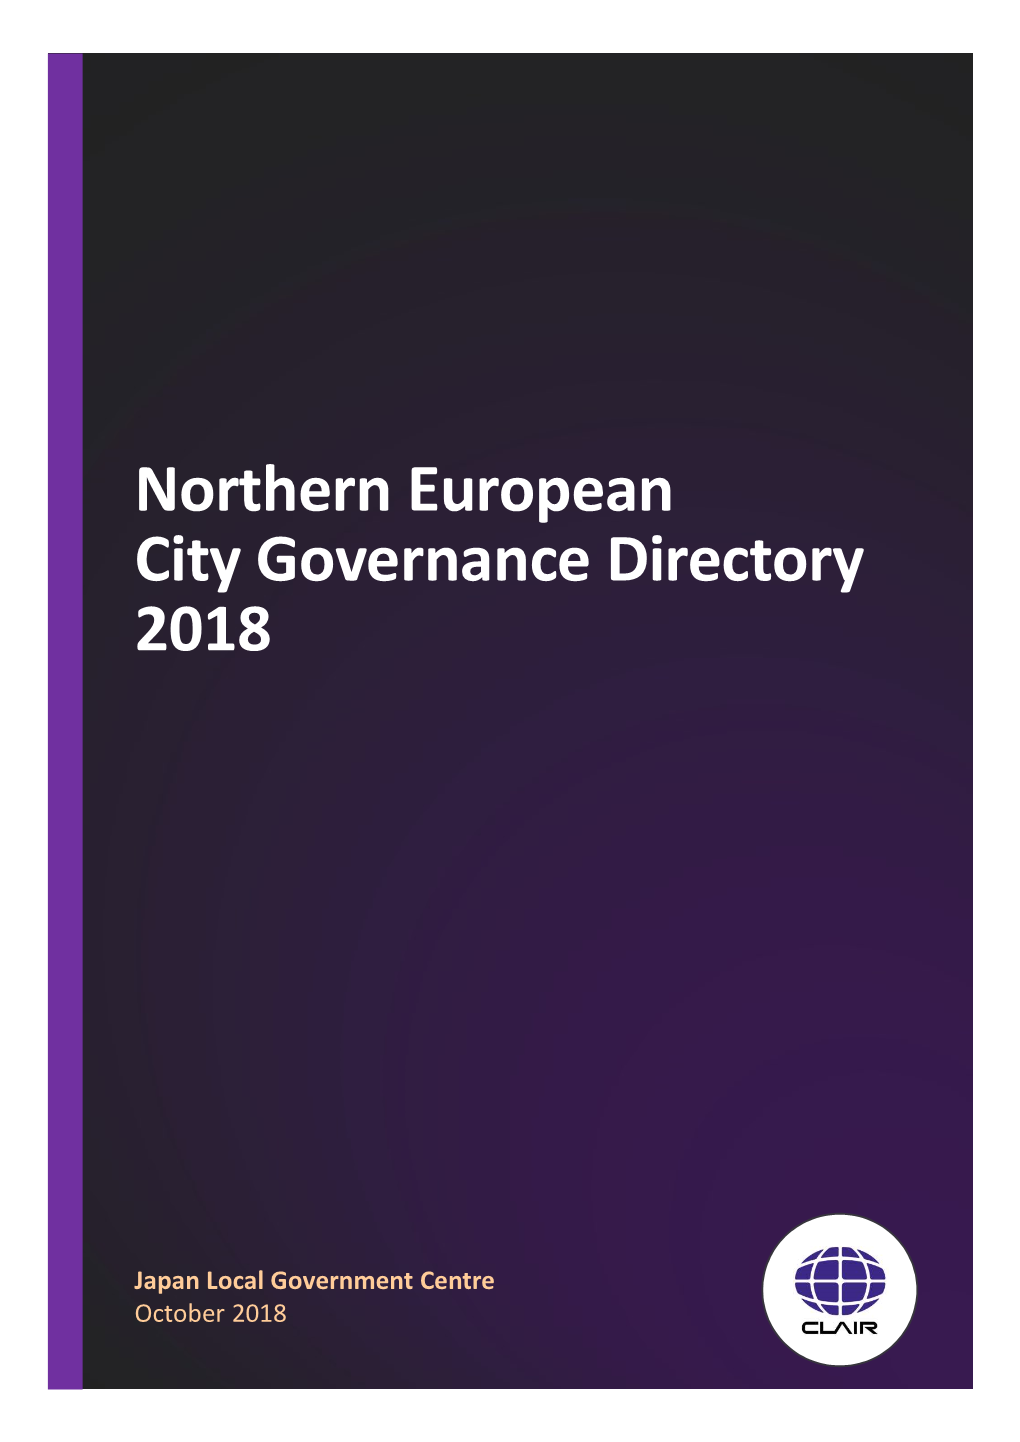 Northern European City Governance Directory 2018